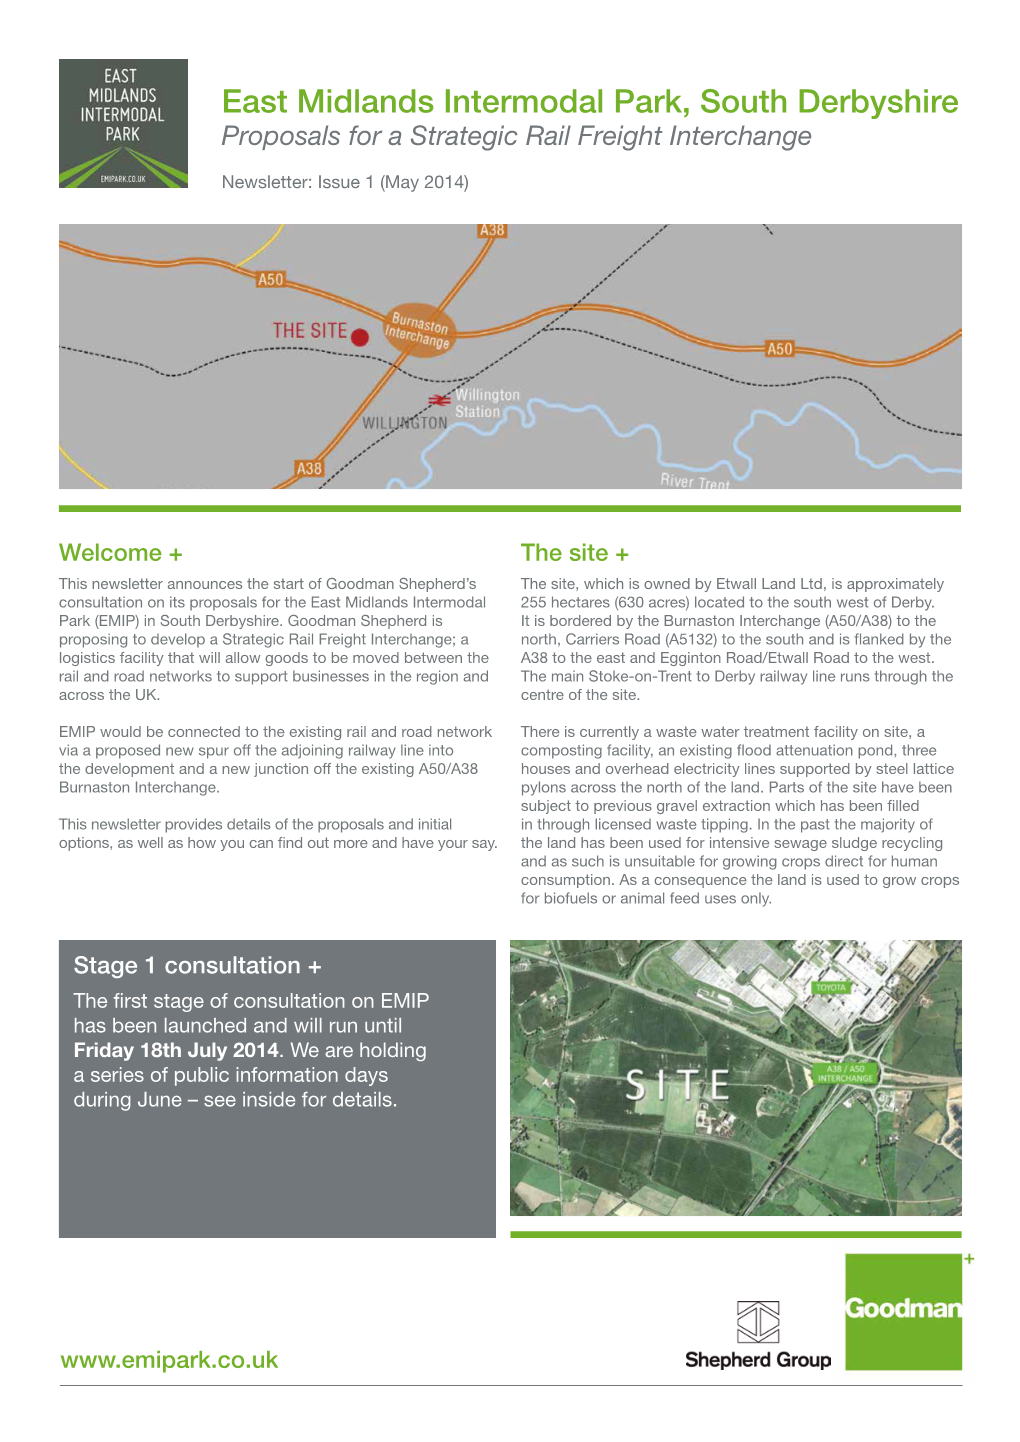 East Midlands Intermodal Park, South Derbyshire Proposals for a Strategic Rail Freight Interchange